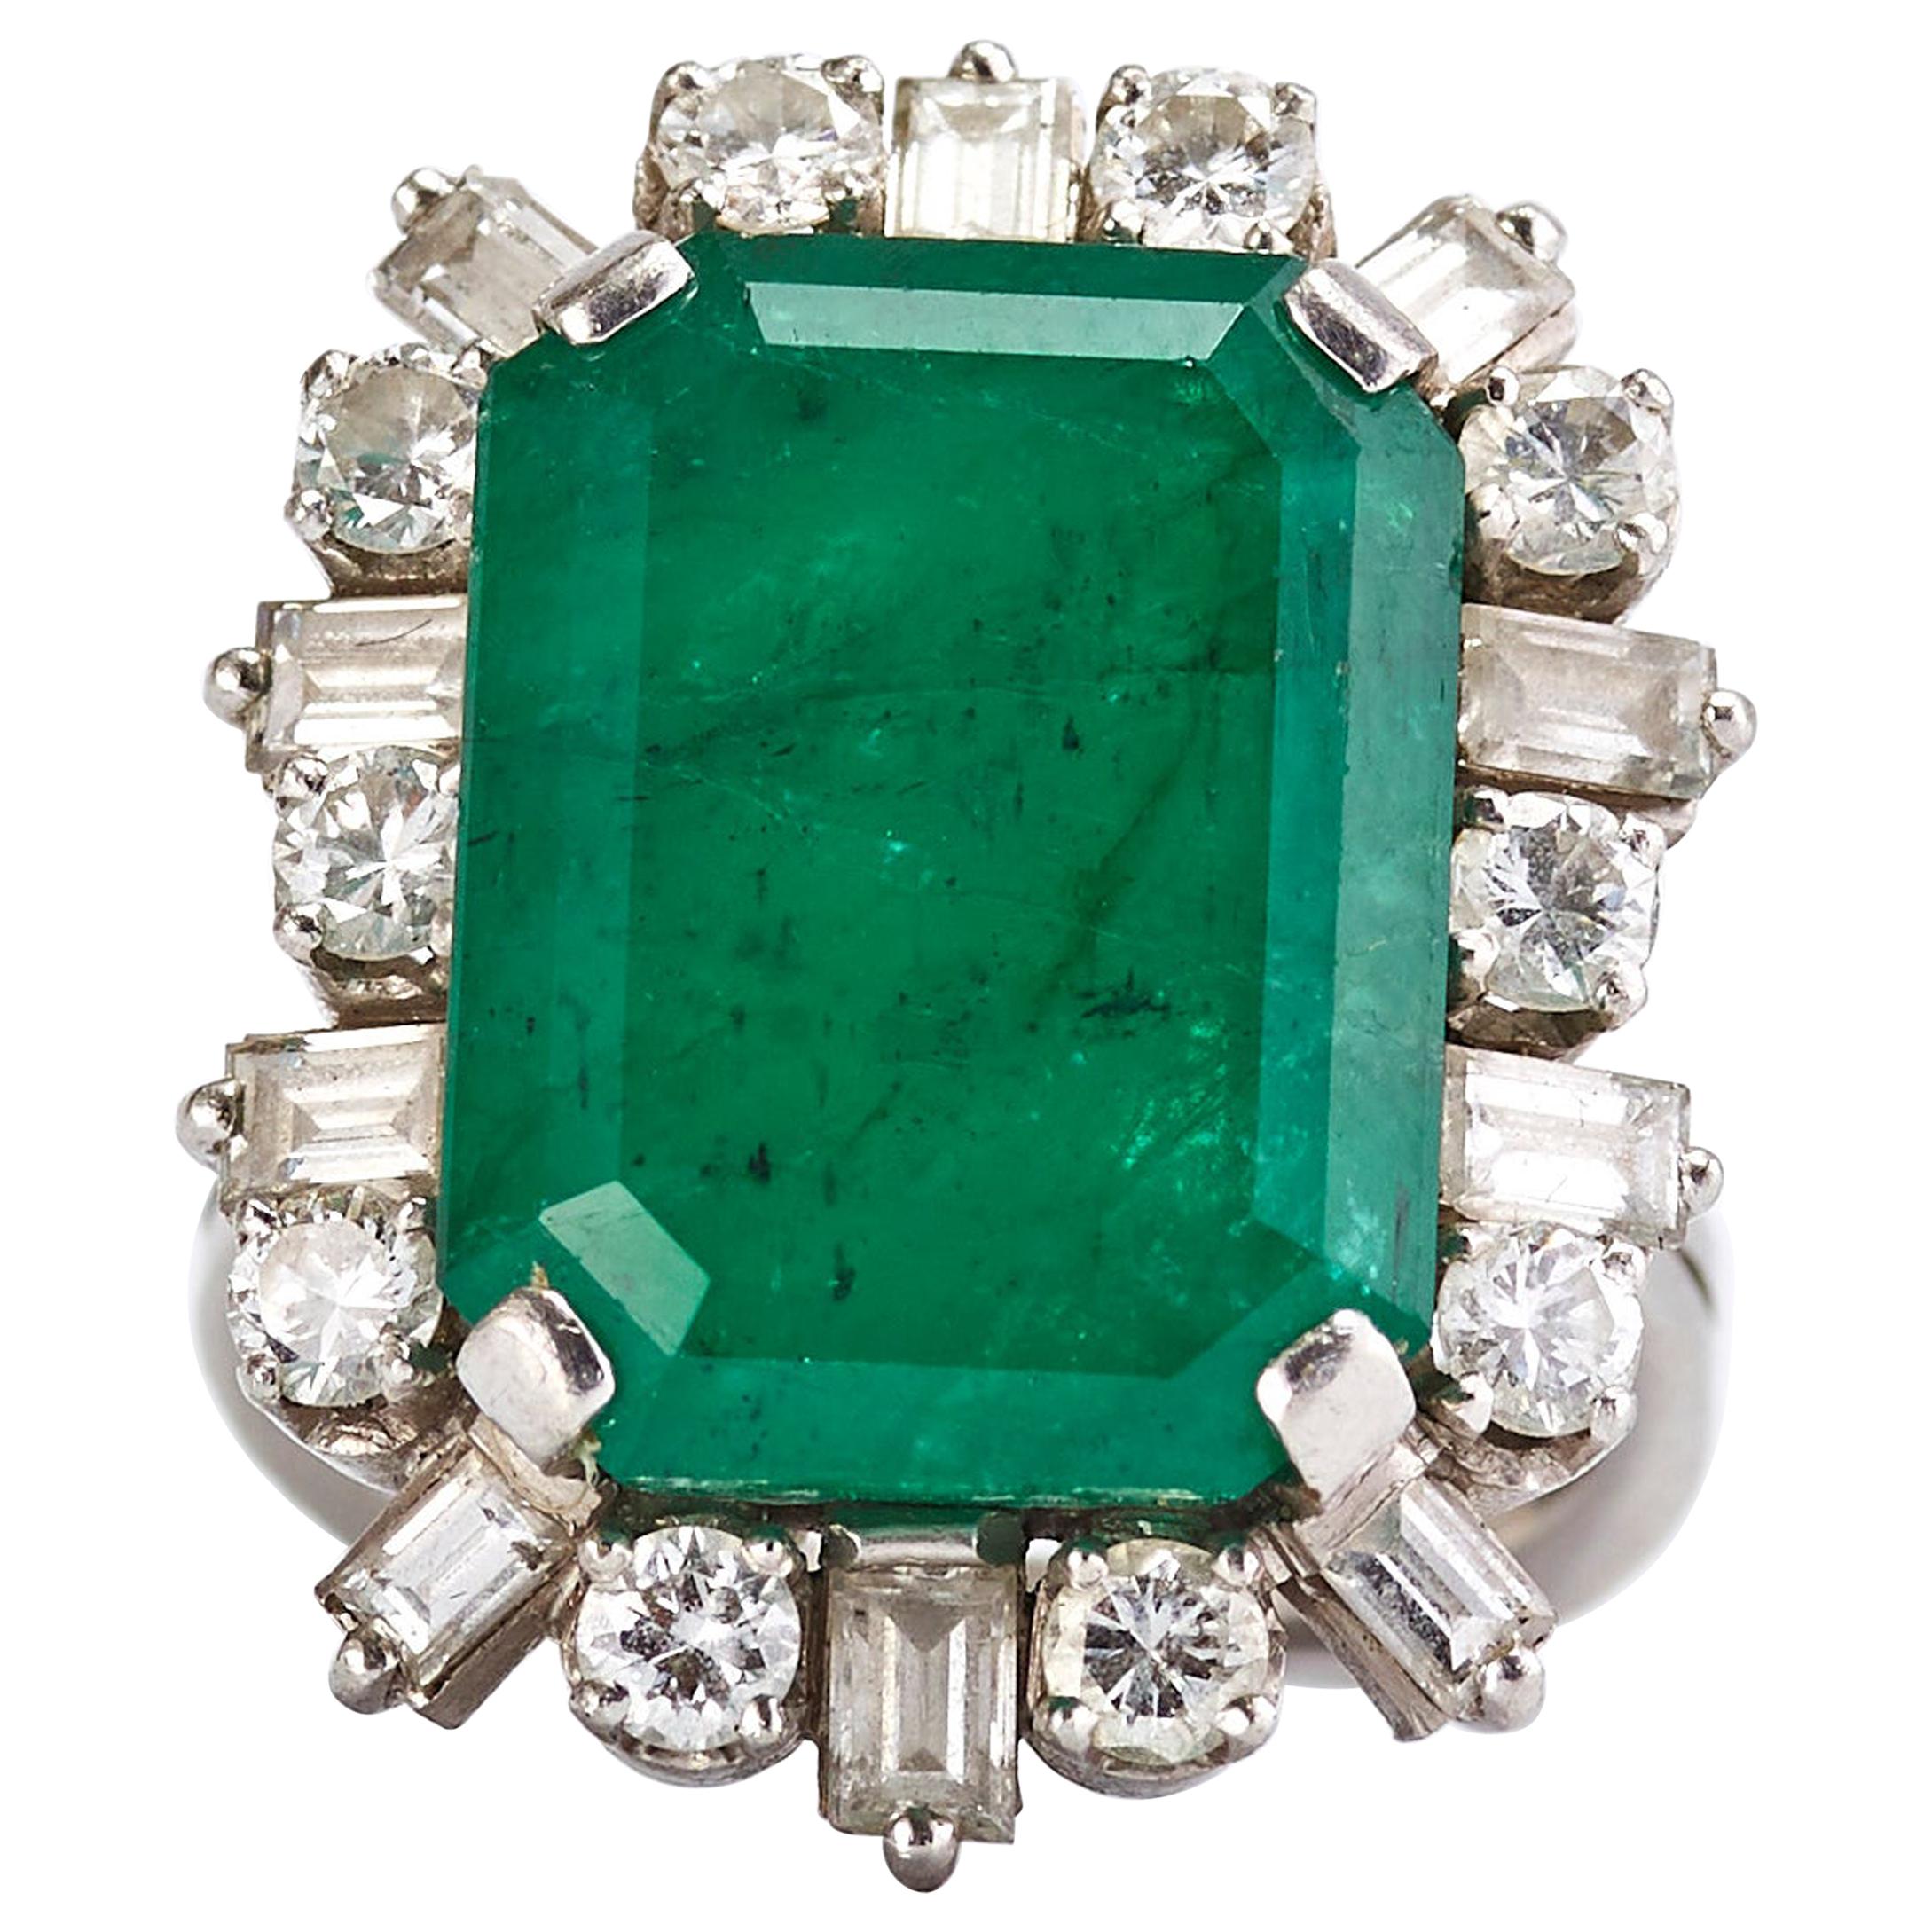 18 Karat White Gold Ring with 8.90 Carat Emerald Stone and Diamonds